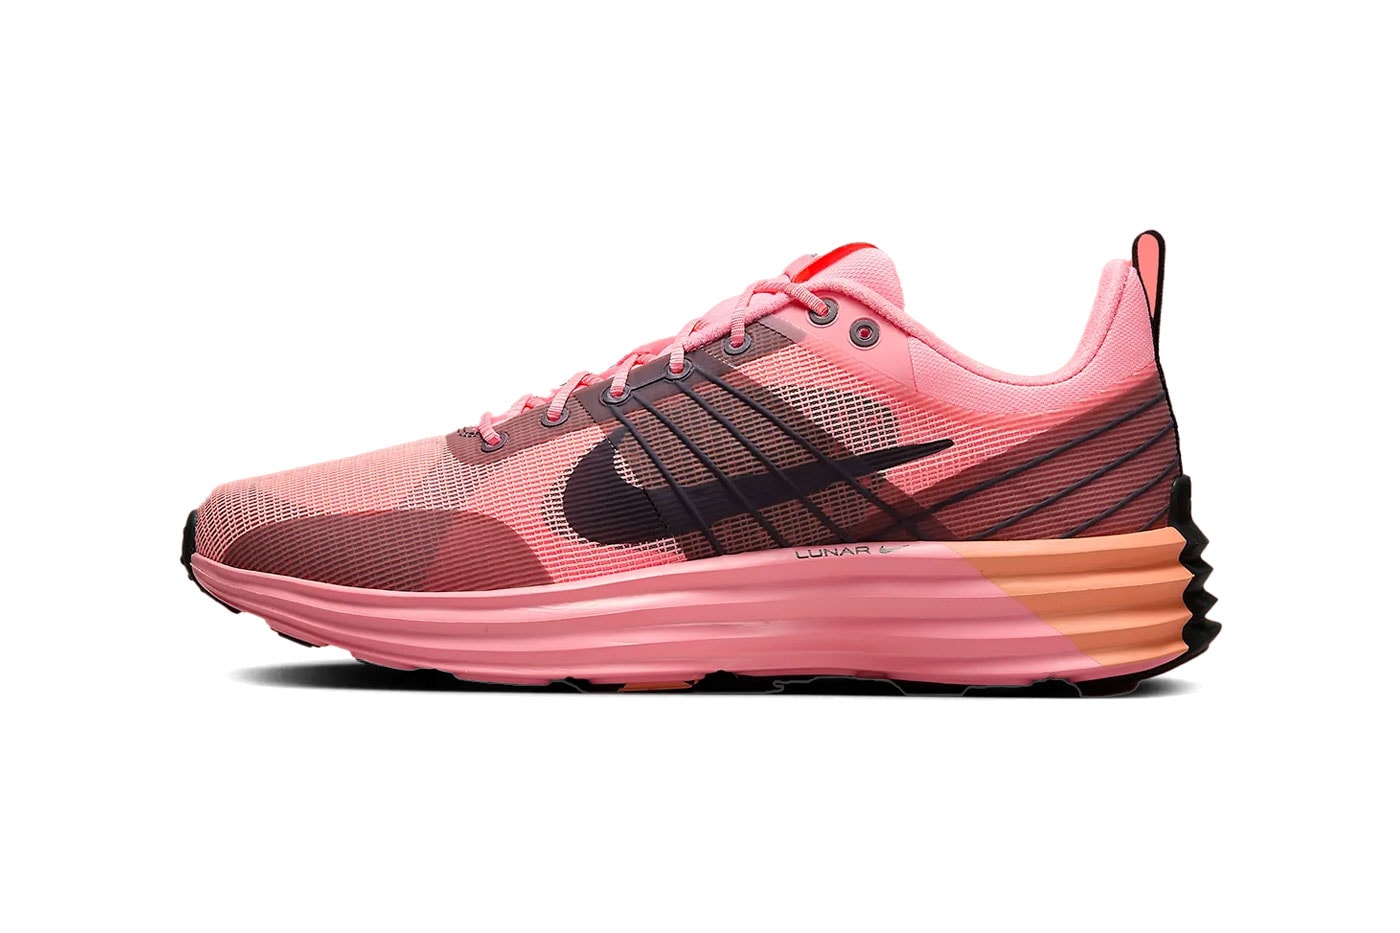 Nike Lunar Roam “Pink Sherbet” New Colorway Info